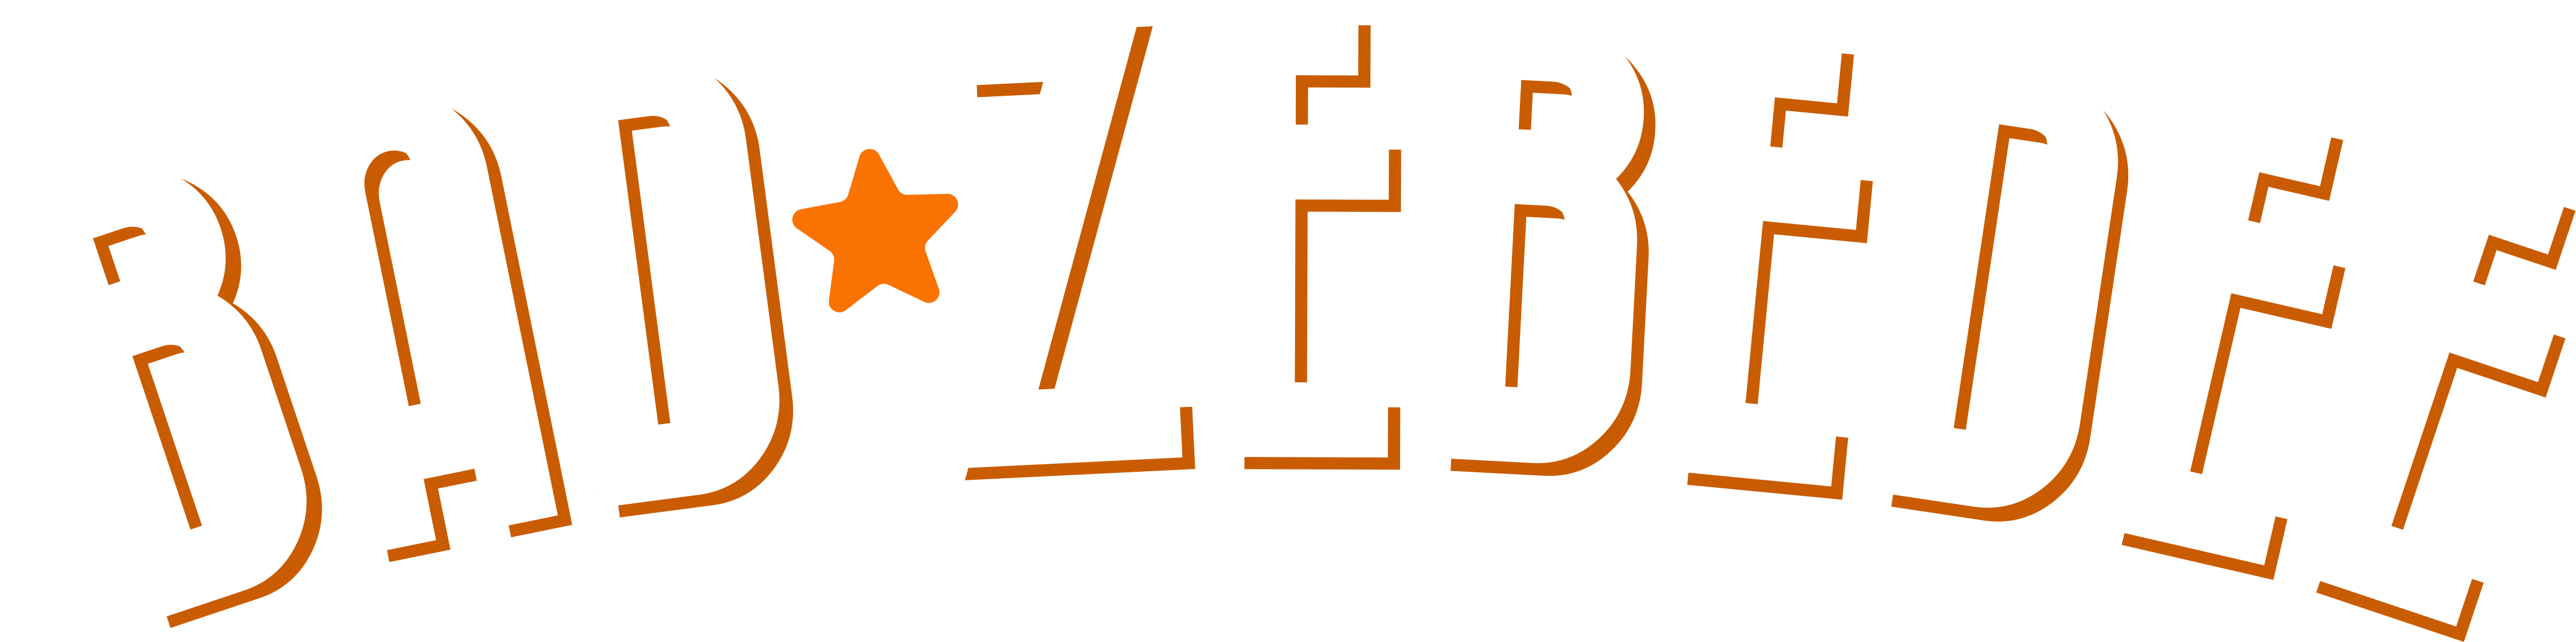 BAD ZEBEDEE LIMITED Logo Image